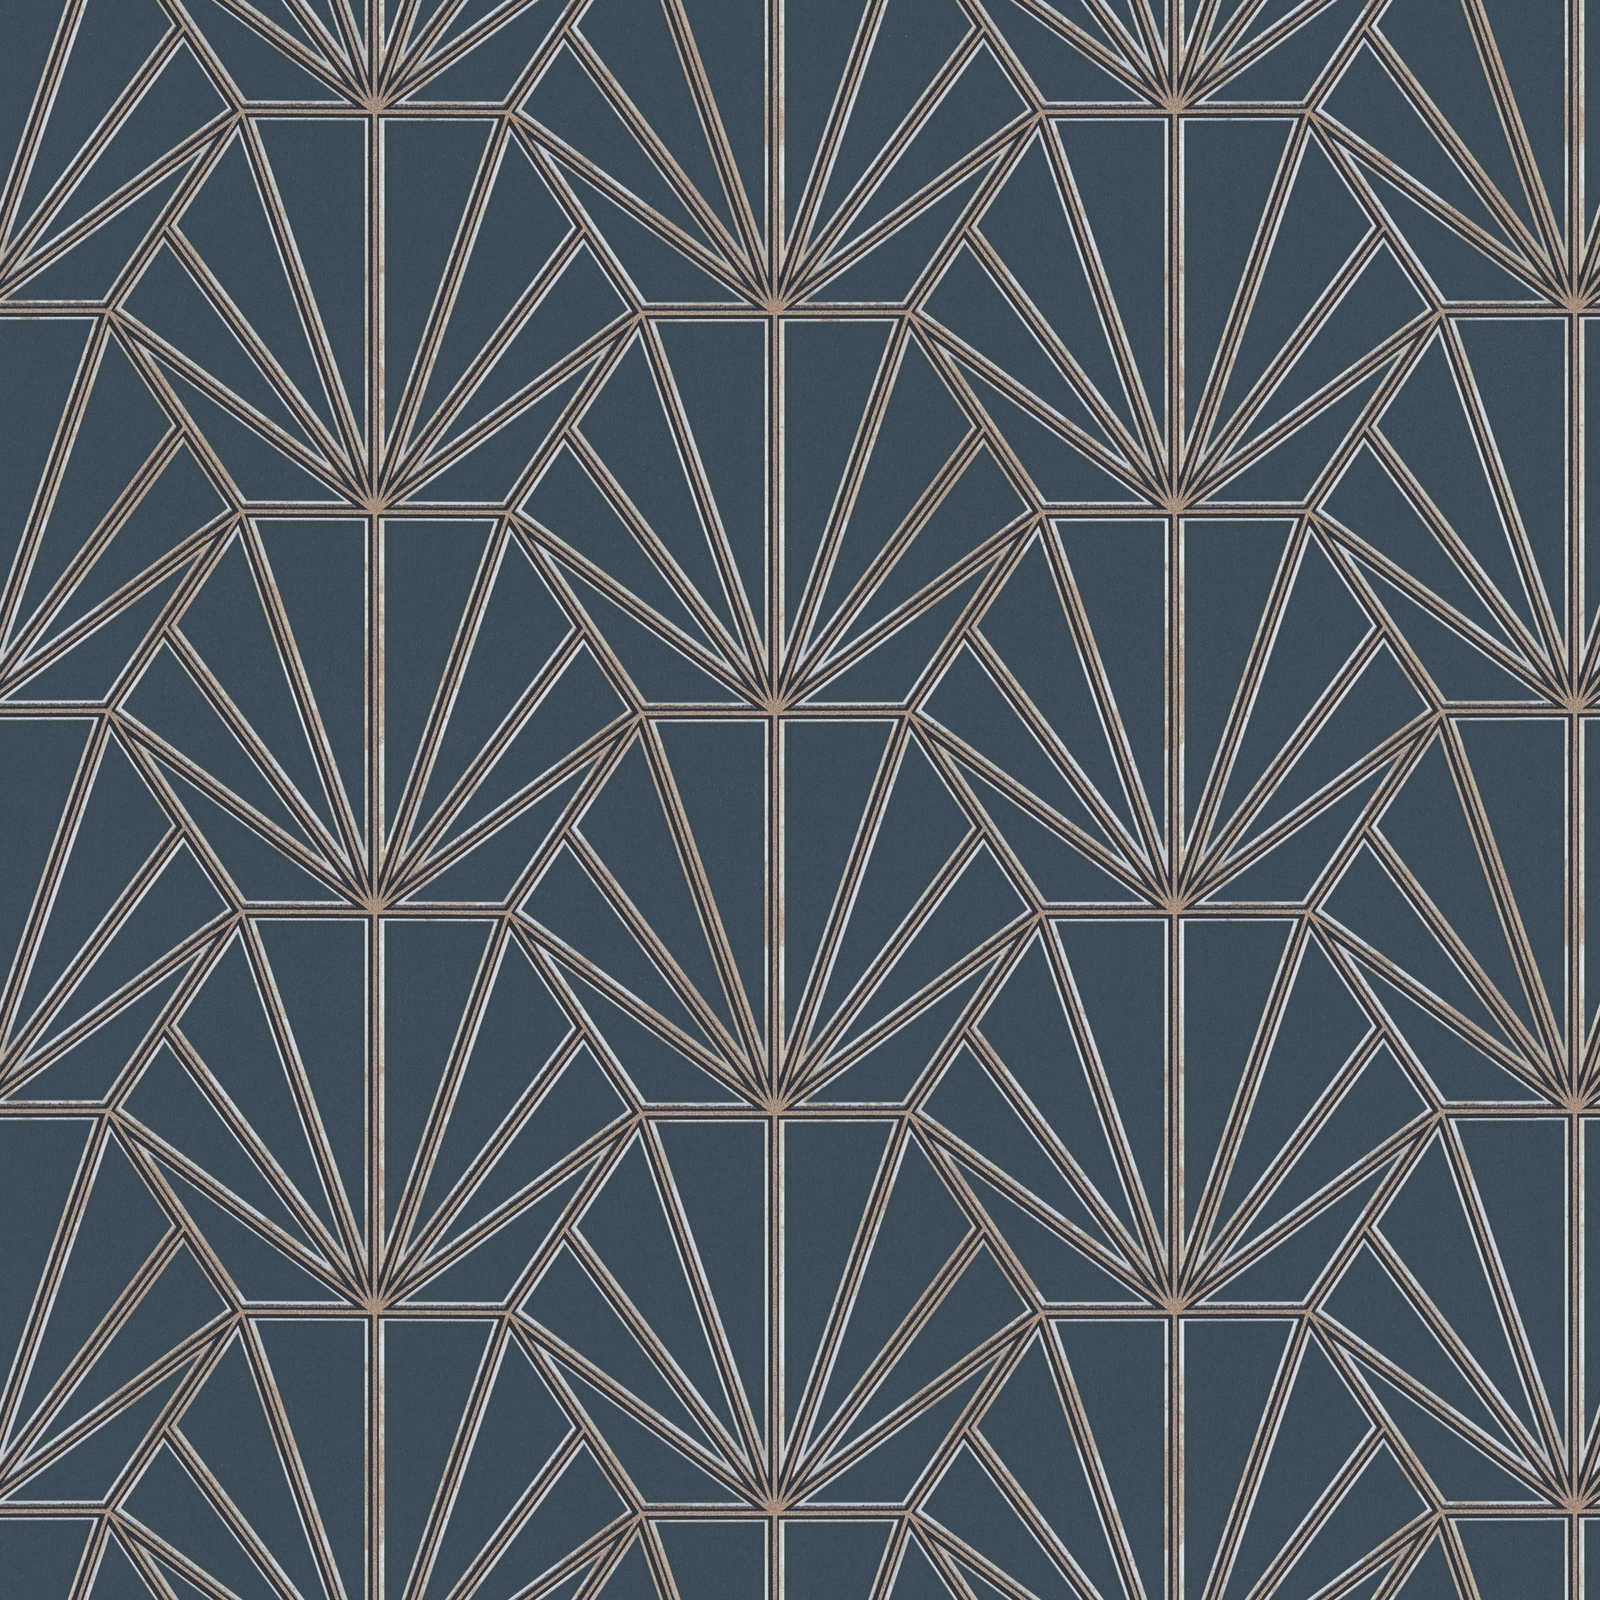 Wallpaper art deco pattern and line motif - blue, gold, black
